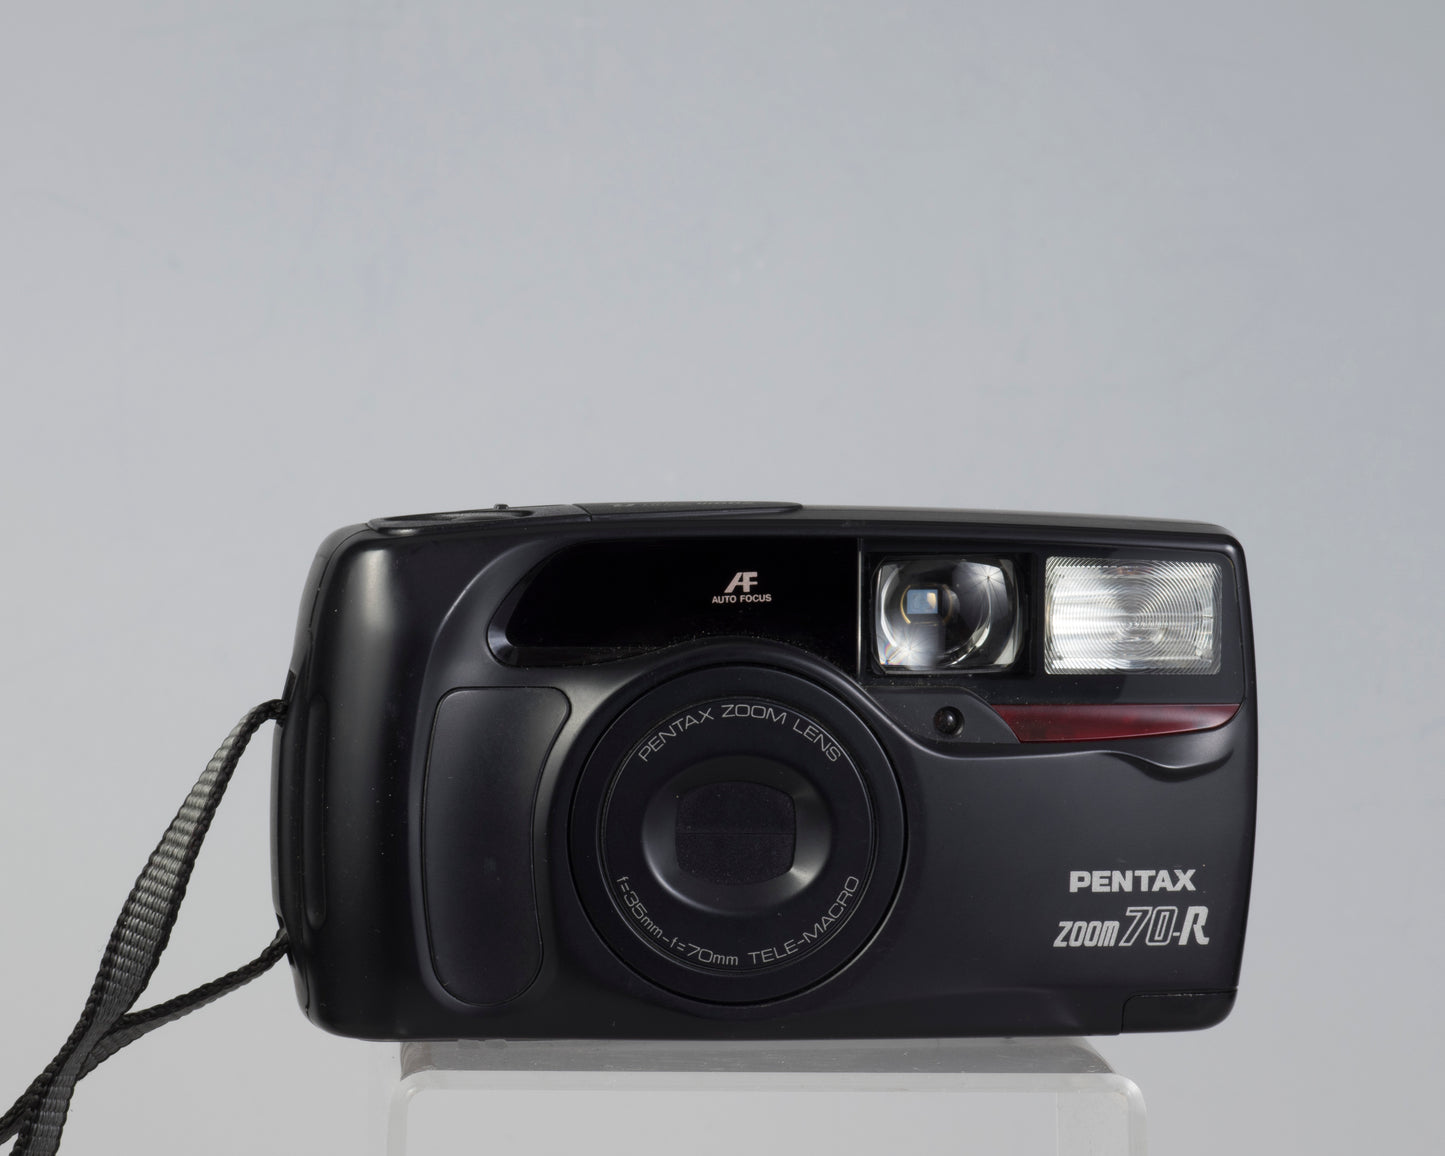 Pentax Zoom70-R 35mm film camera w/case (serial 3675866)